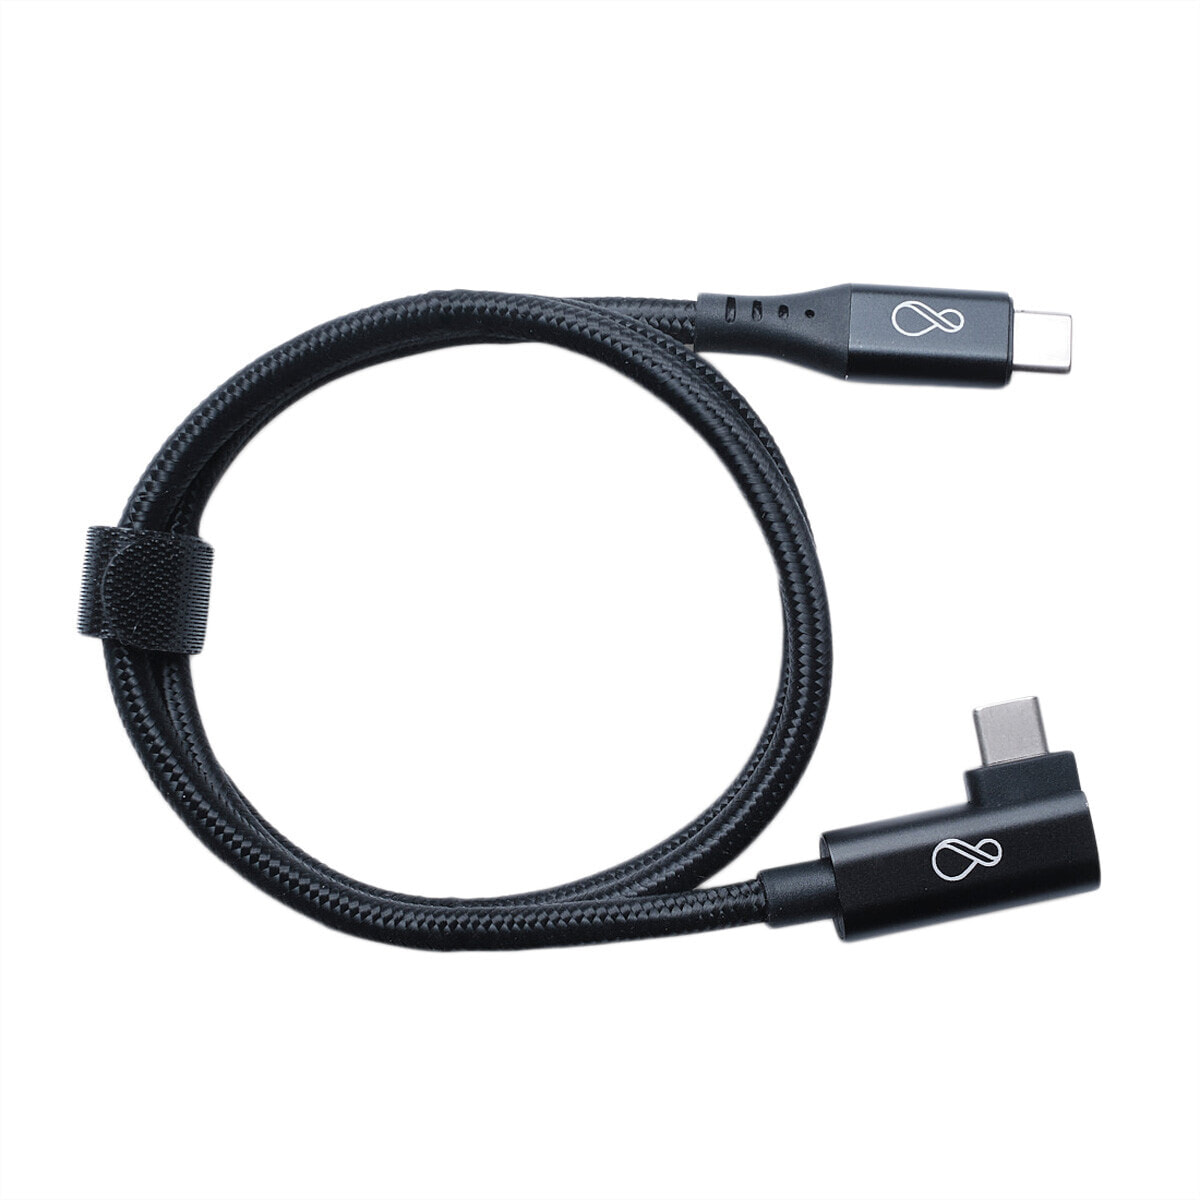 Ochno USB-C Kabel gewinkelt 0.7m schwarz - Cable - Digital